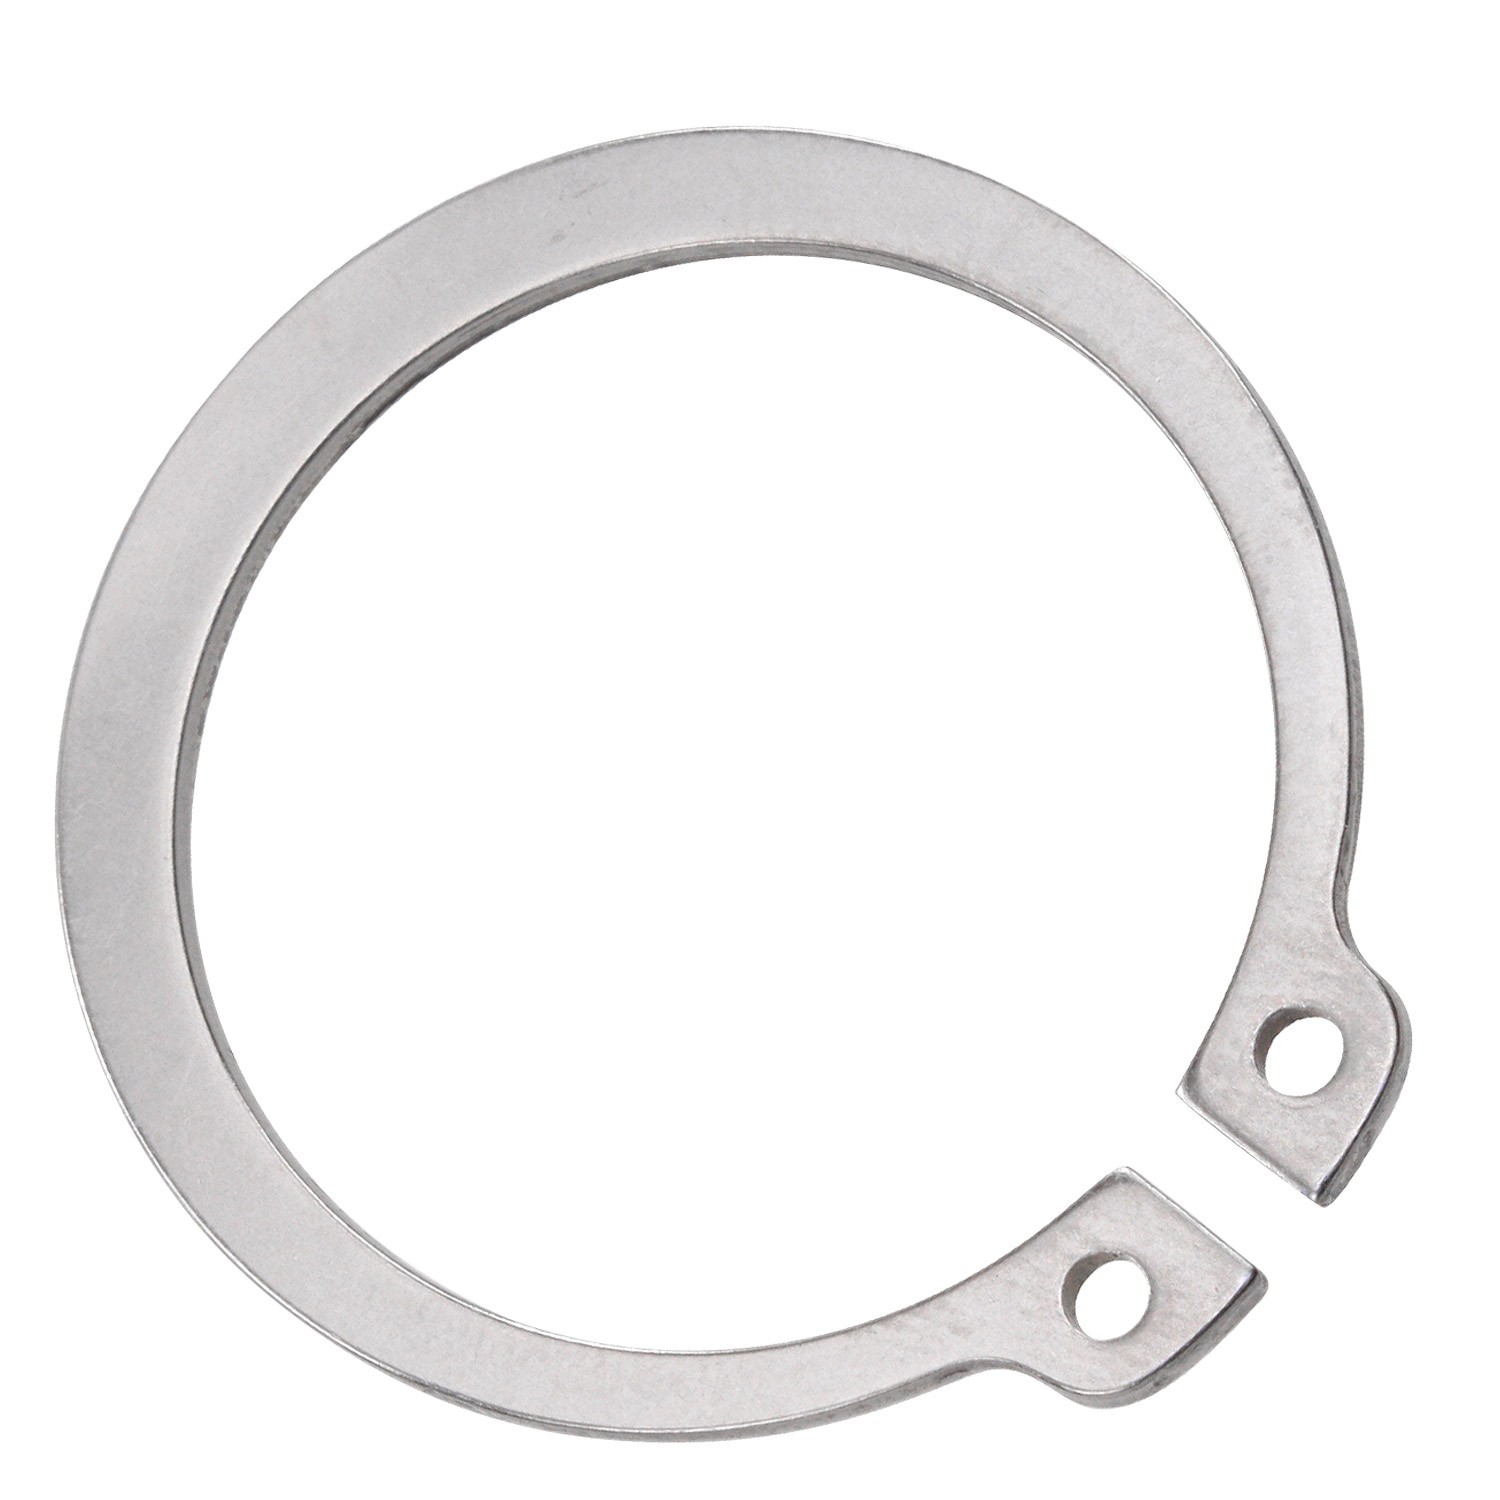 Кольцо стопорное наружное 26х1,2 DIN 471, нержавеющая сталь 1.4122 (А2) - фото